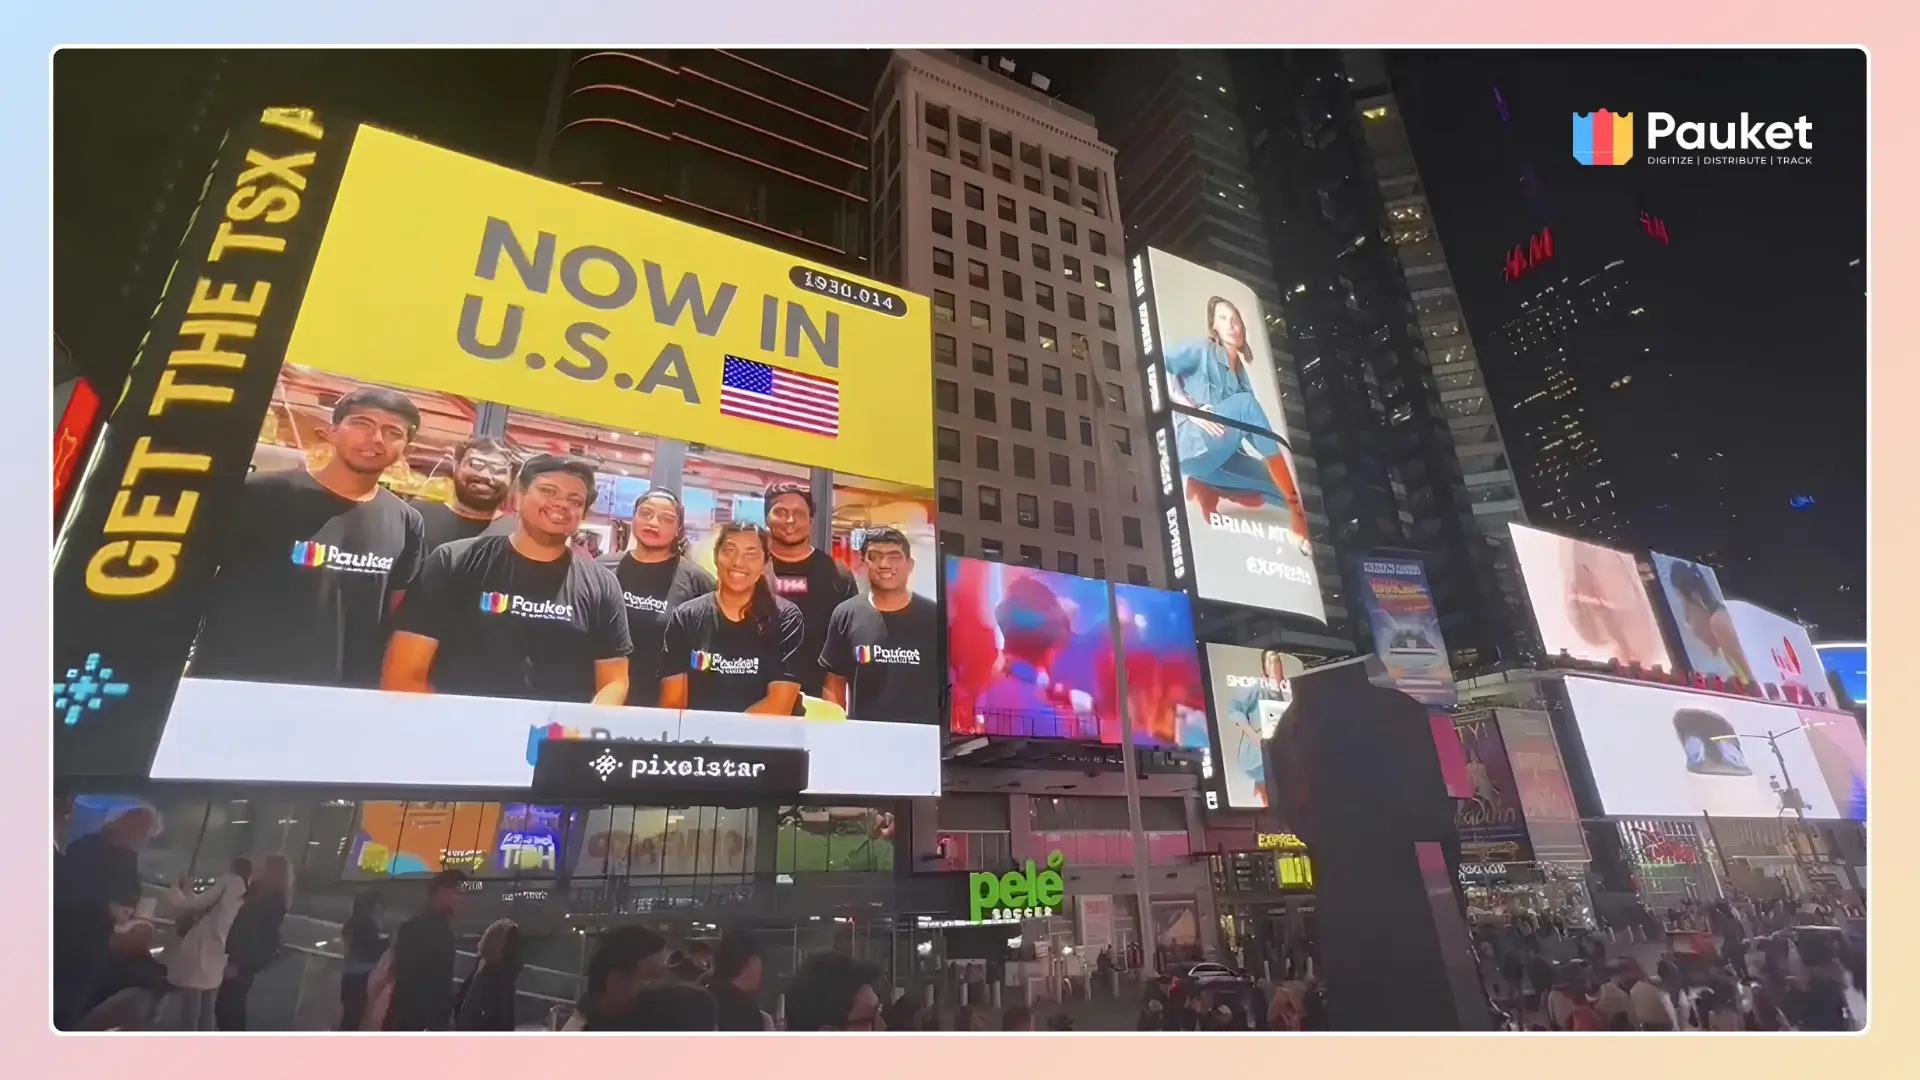 Times Square Triumph | Pauket’s Bold Step into the US Market